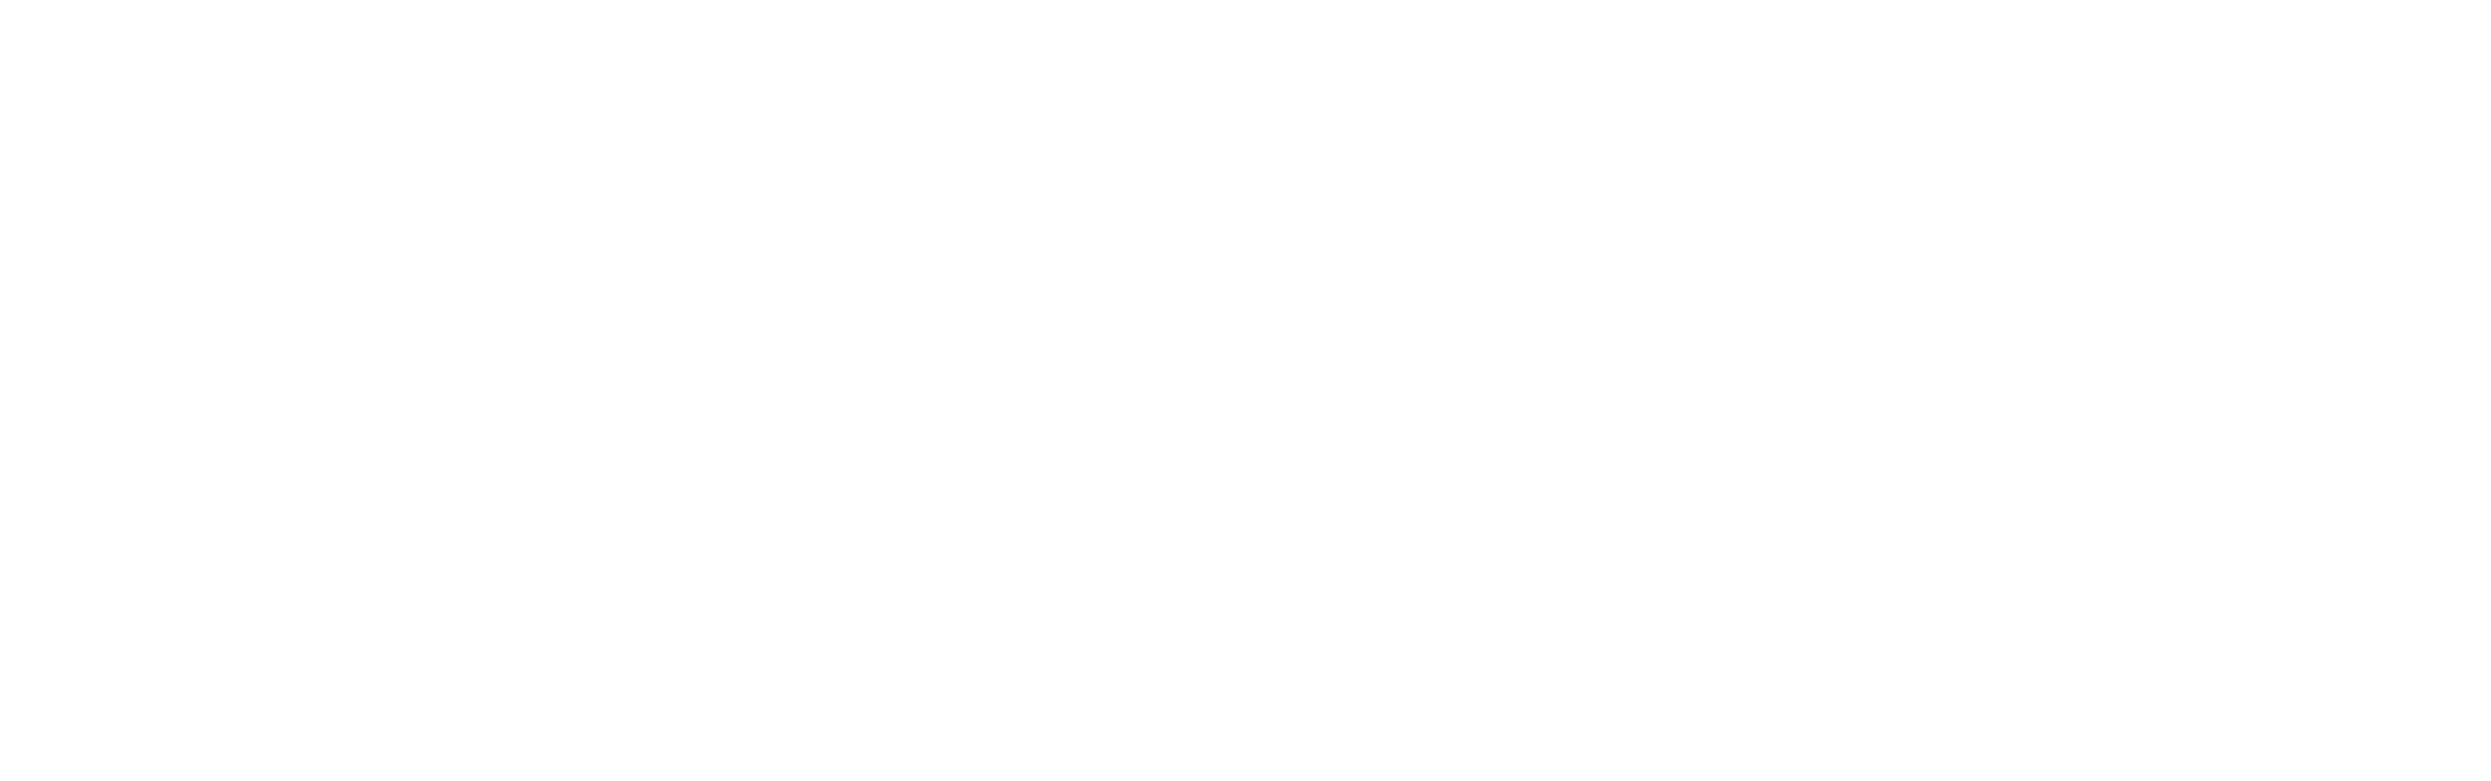 Annual2023-logo-White